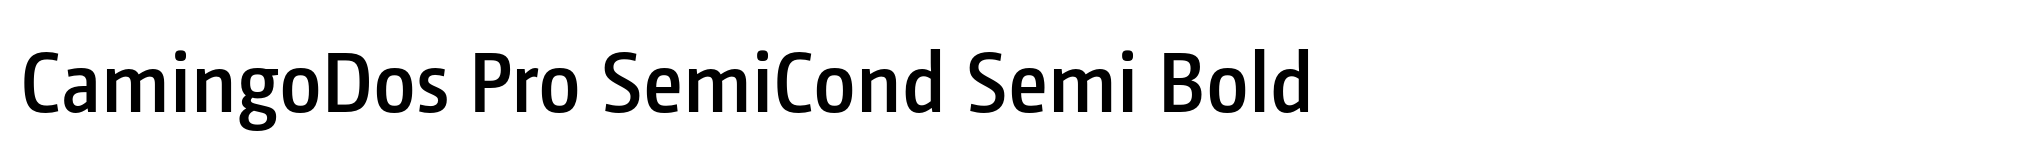 CamingoDos Pro SemiCond Semi Bold image